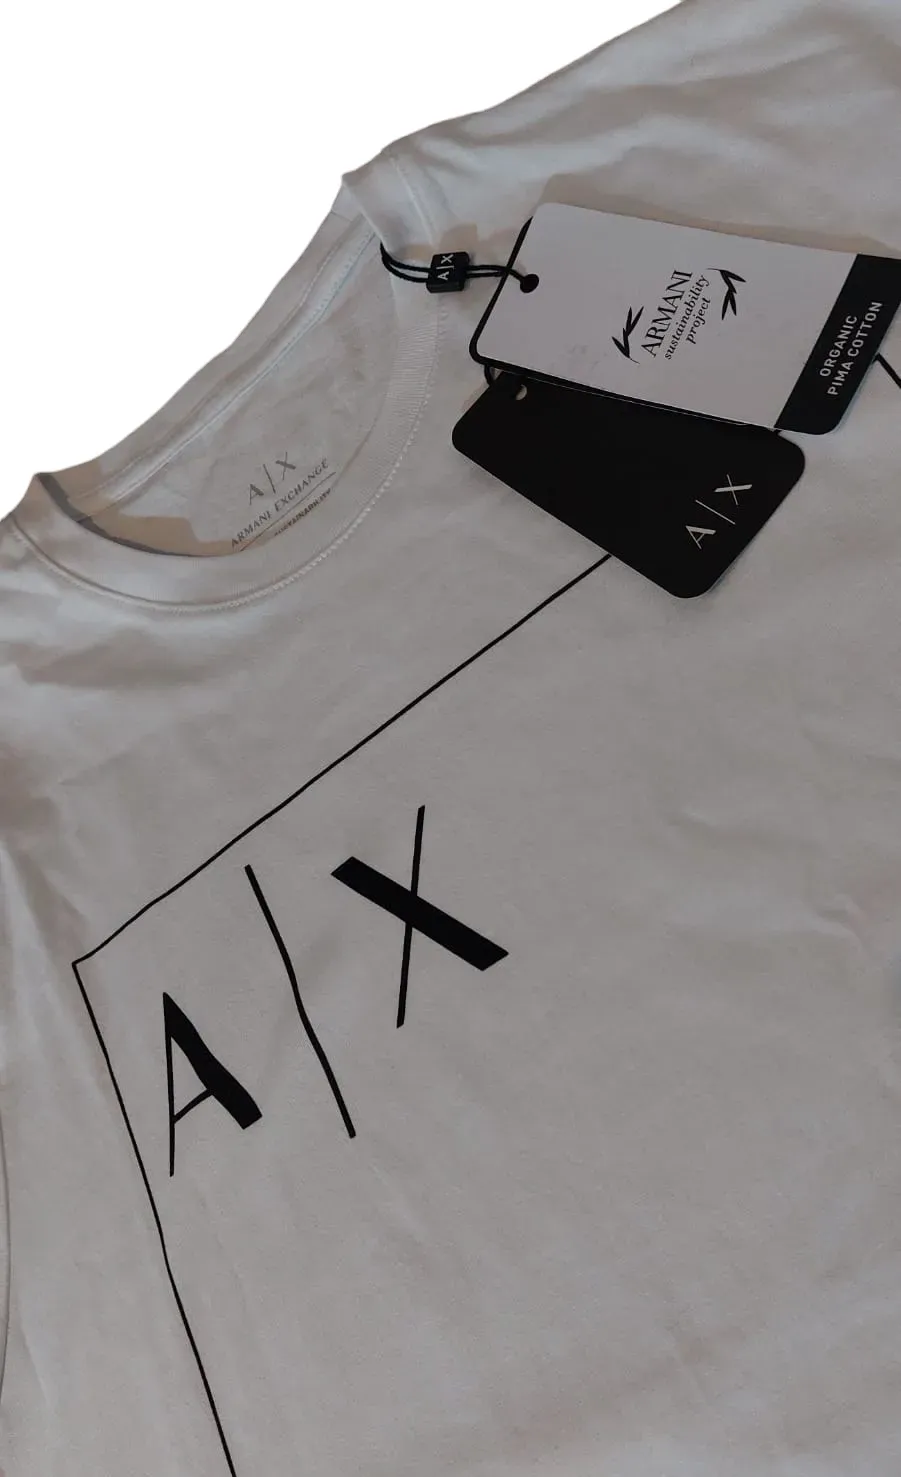 Camiseta blanca Armani Exchange